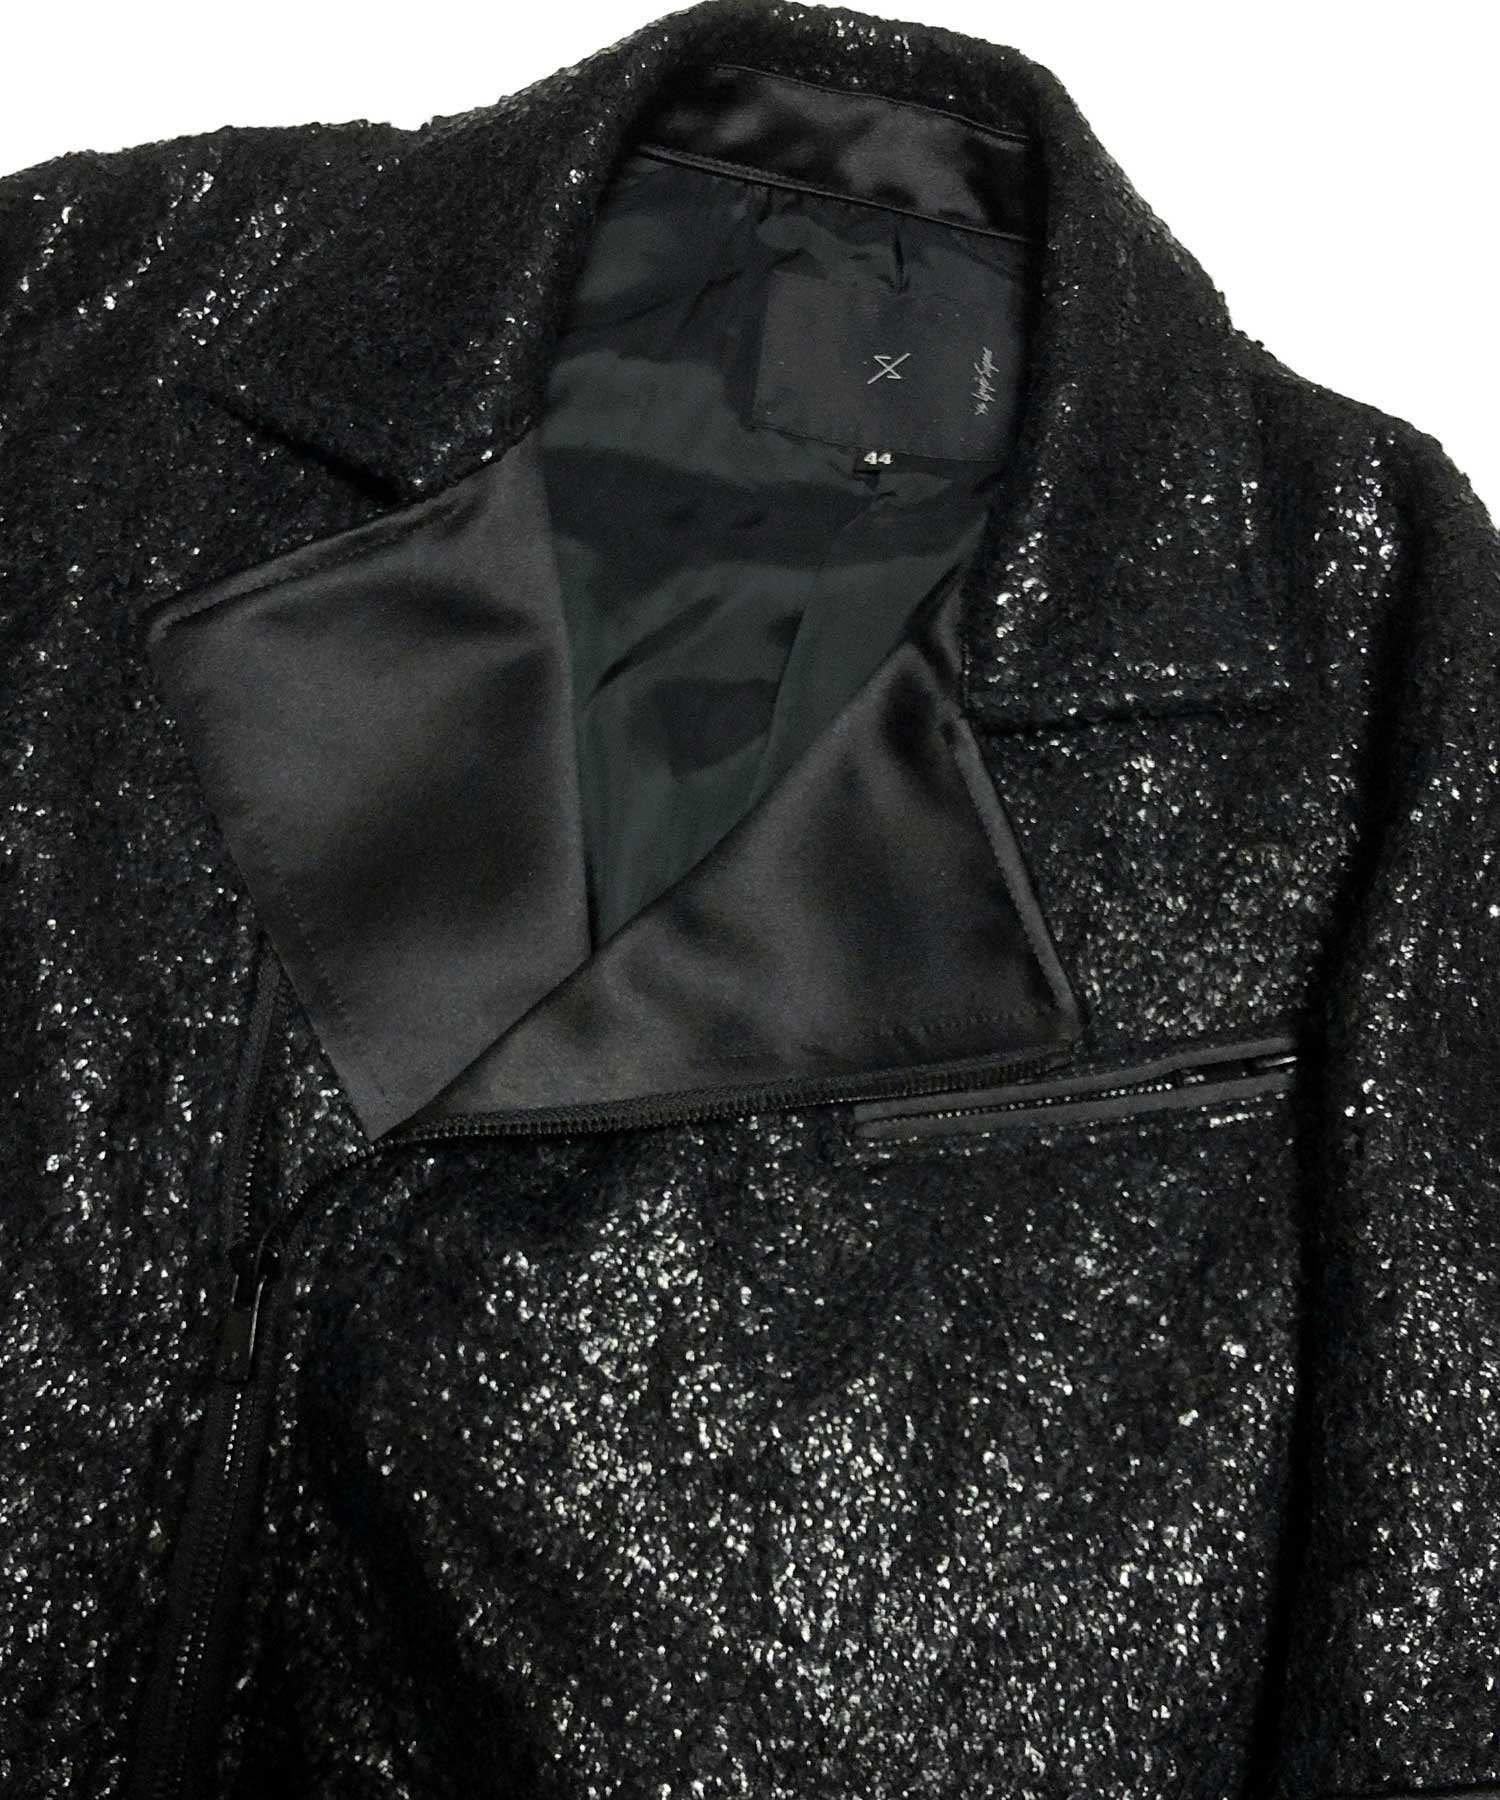 ys Yuji SUGENO (イース ユウジ スゲノ）Black Foil Tweed Double Riders Jacket